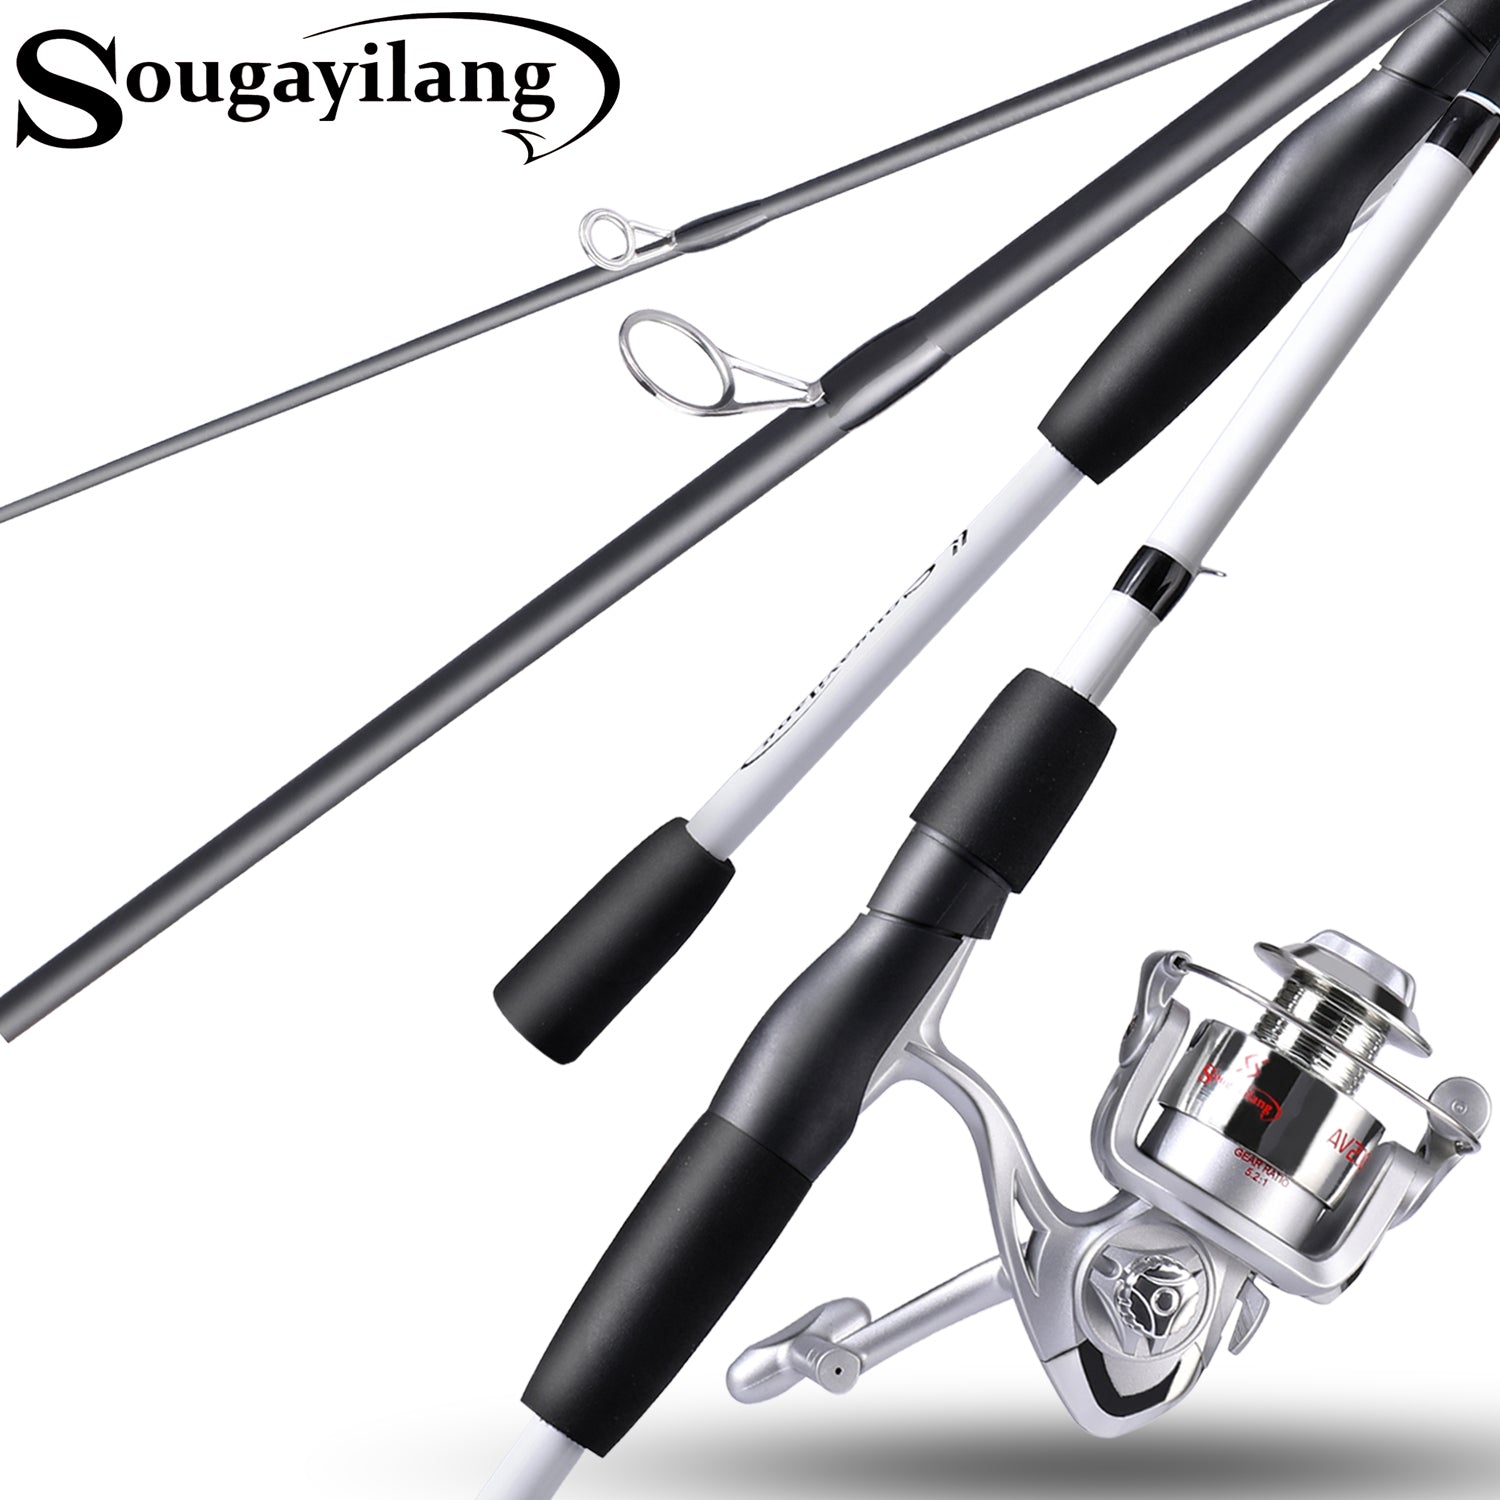 Sougayilang 1.98m Fishing Rods Combo Portable 4 Section Carbon Fiber